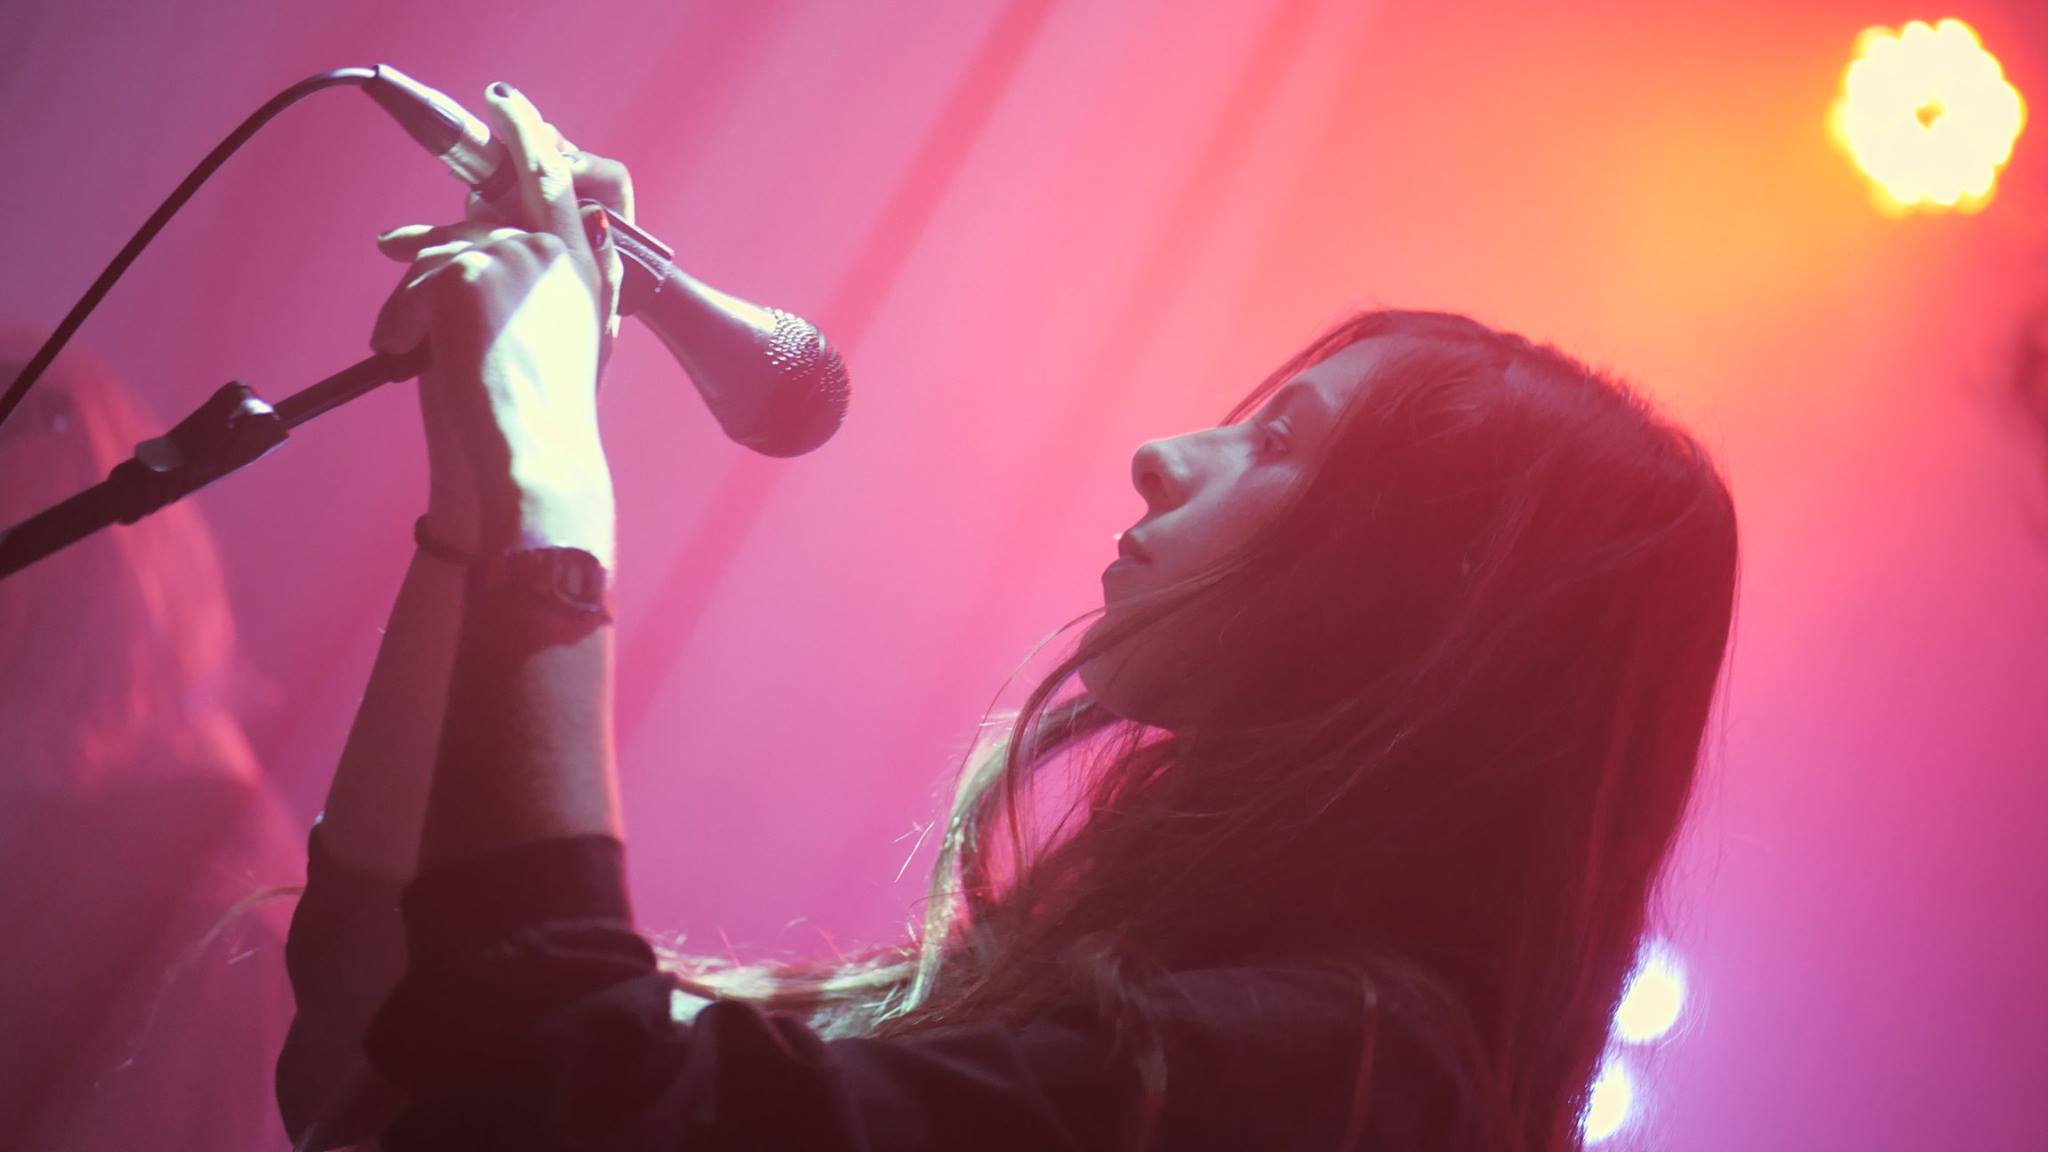 Dead Sea and Niko Yoko en concert au Supersonic (Paris) en septembre 2017